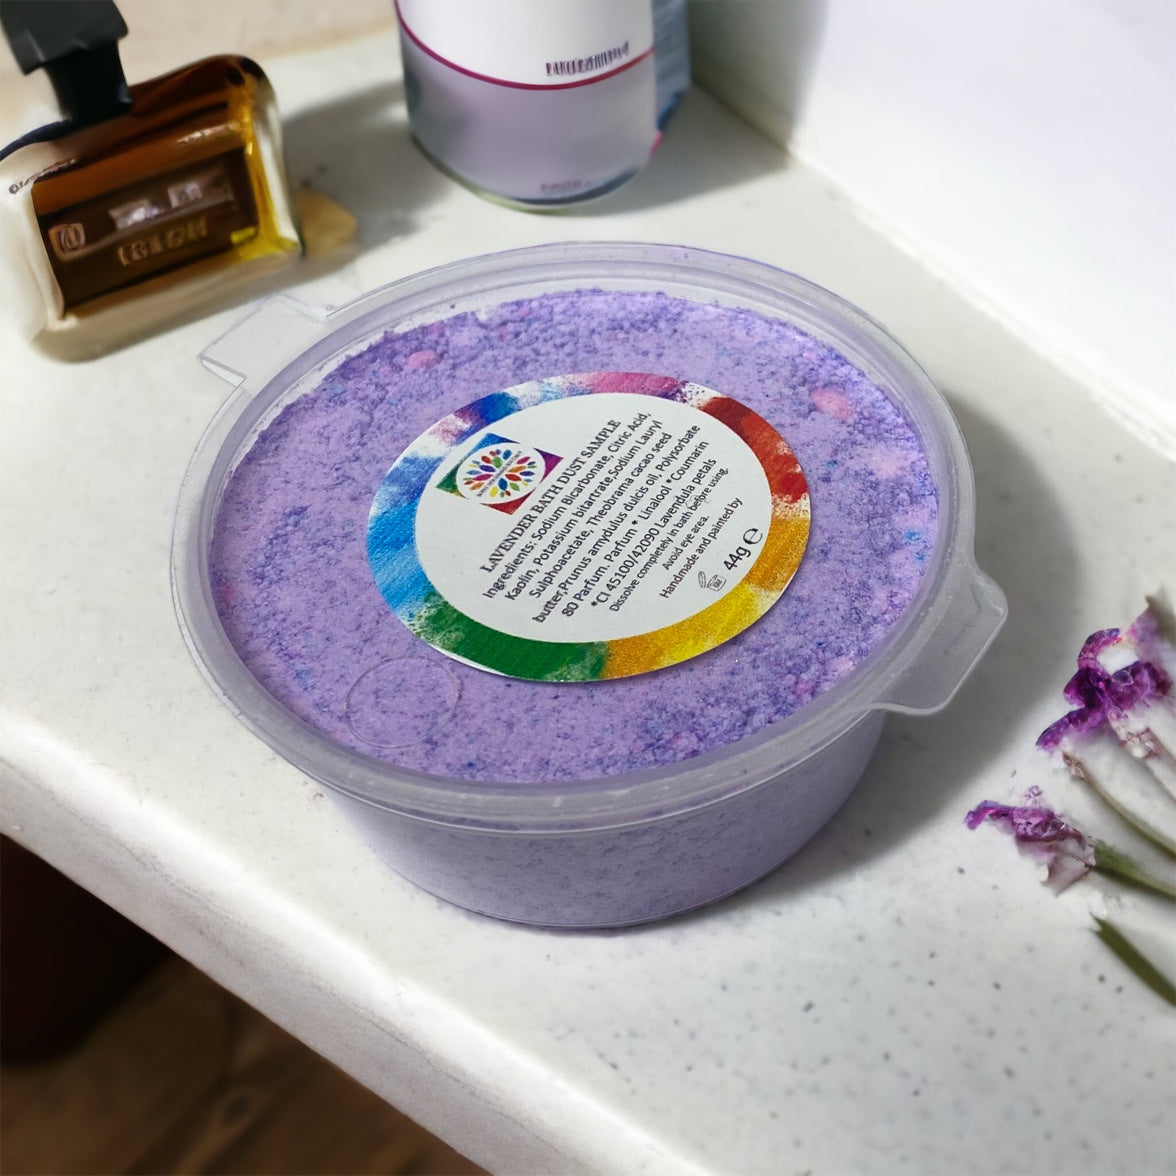 Ten Fragrance Samples in Bath Bomb Dust